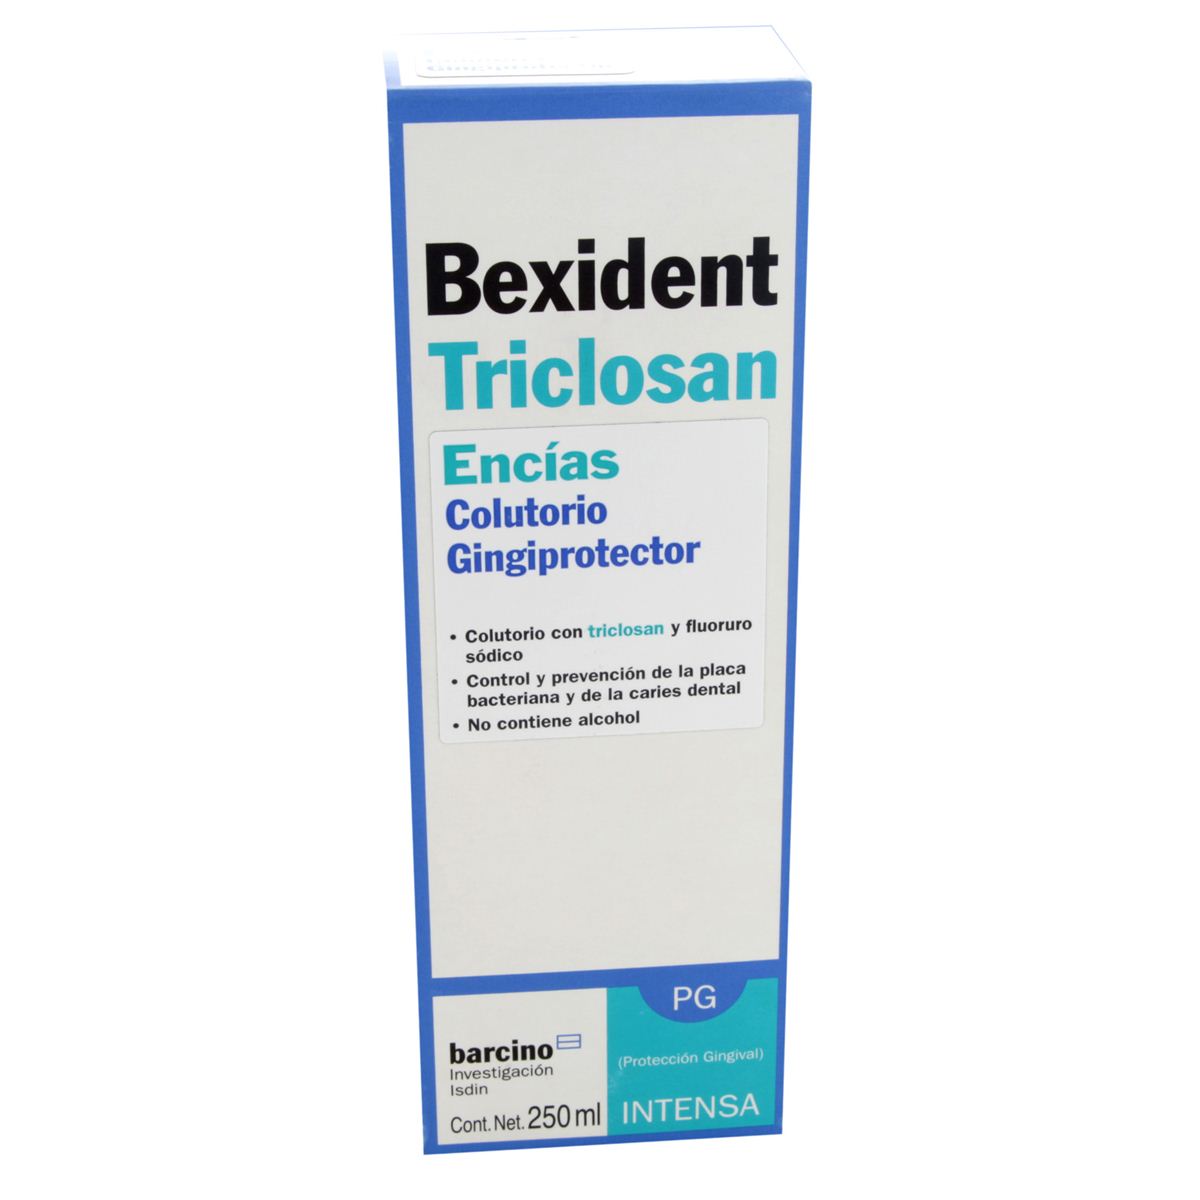 Bexident triclosan 250ml